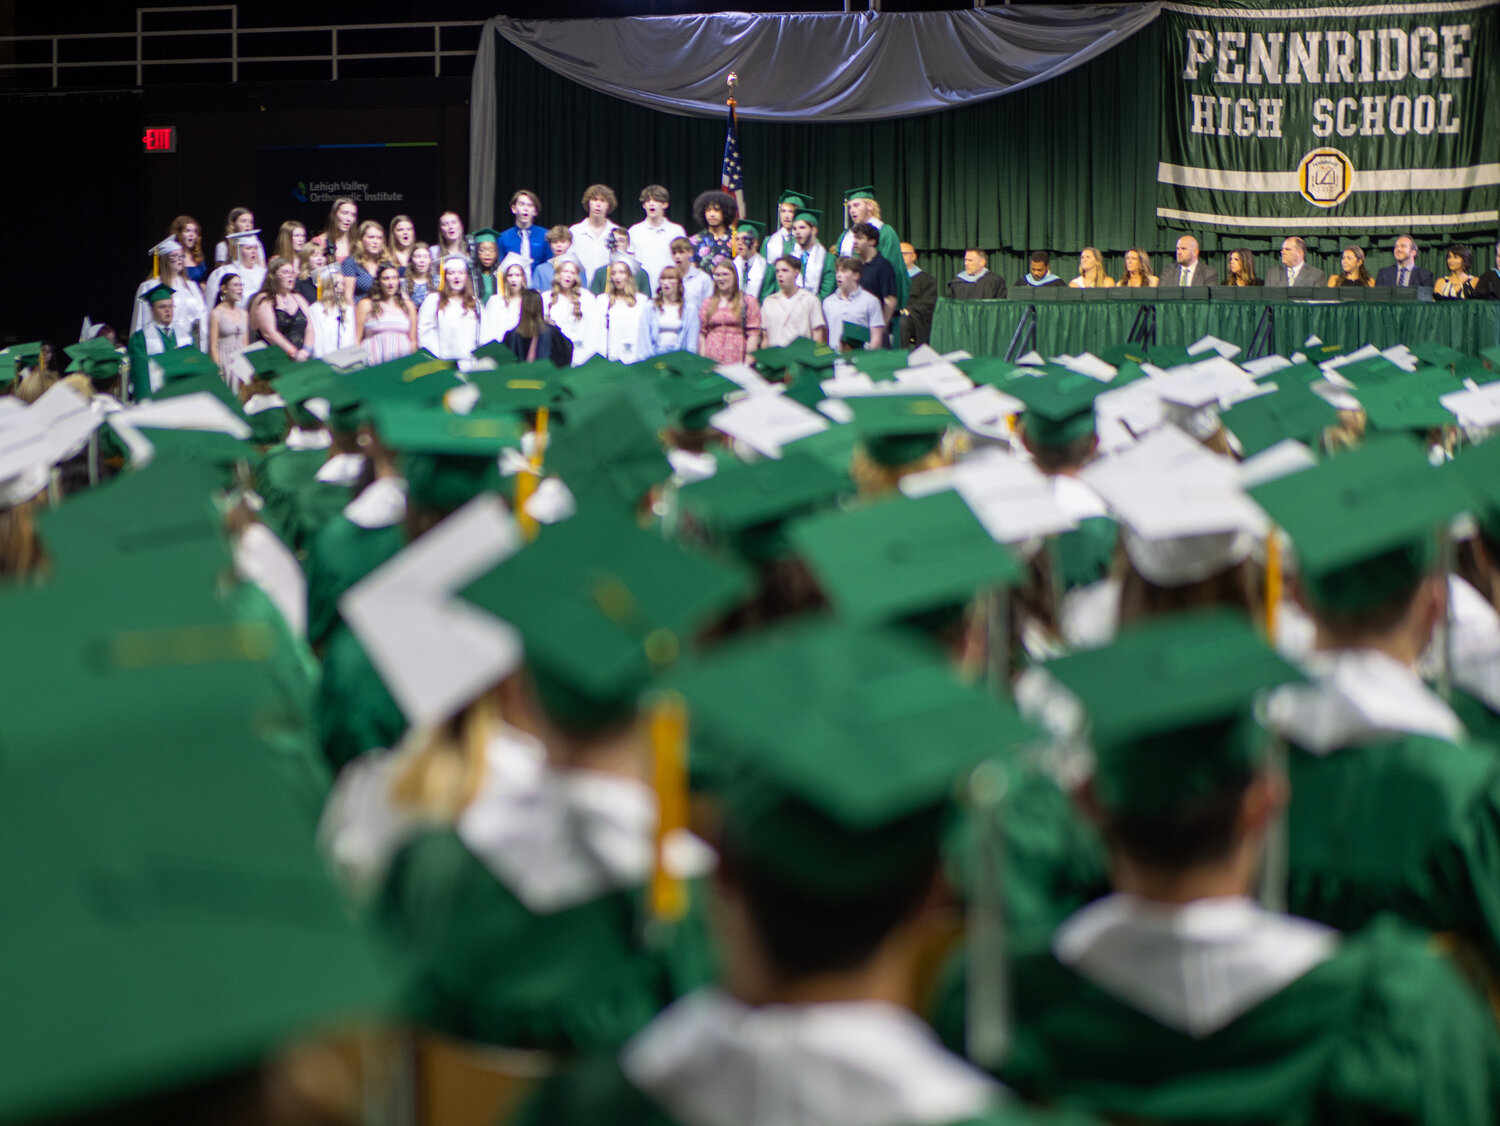 The choir sings during the Pennridge High School graduation.